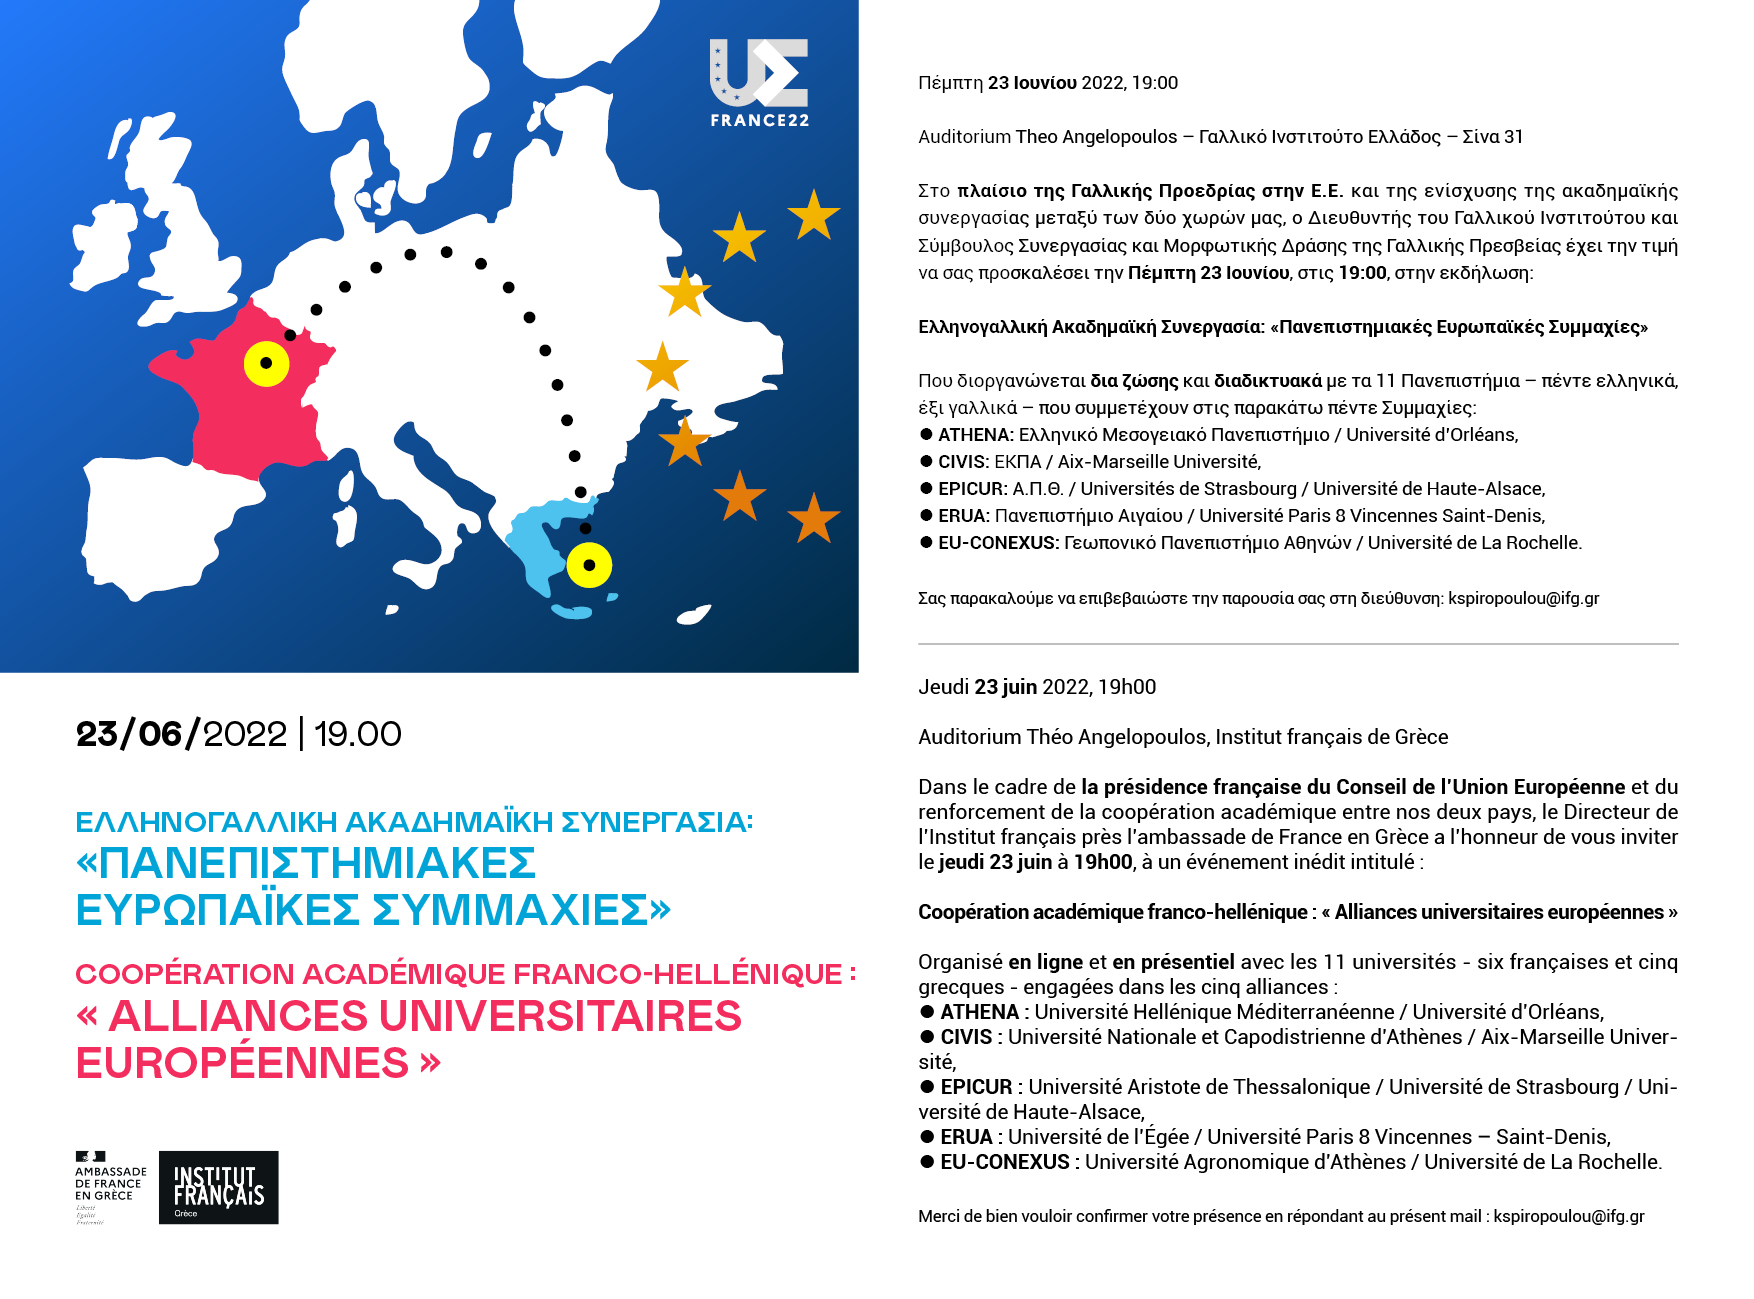 Alliances universitaires européennes_WEBInvitation (002).jpg